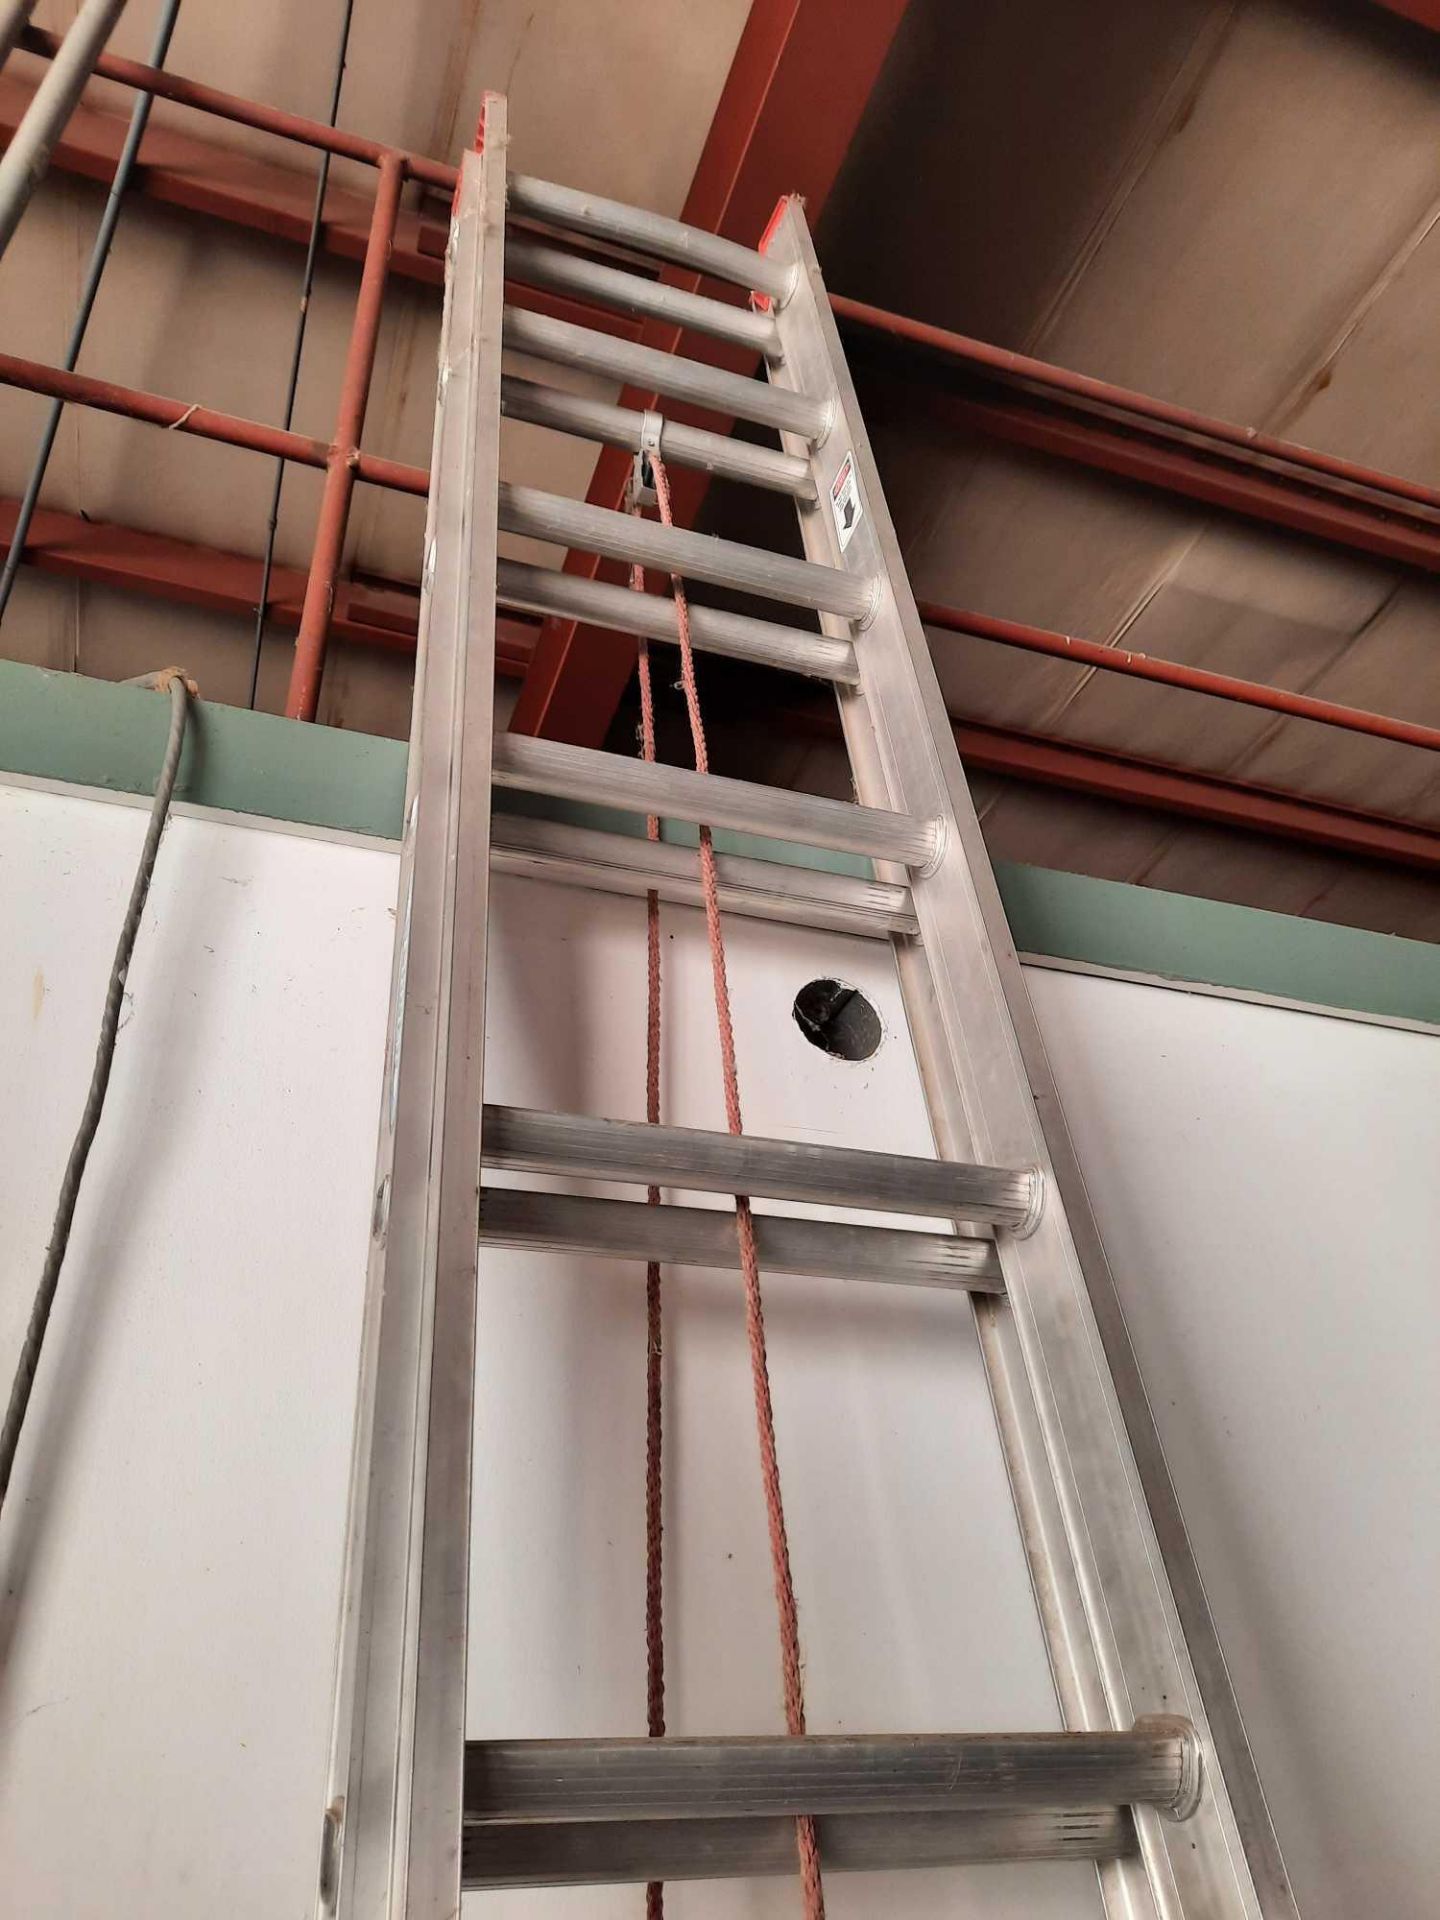 Werner 24 foot extension ladder, model D1124-2, 200lb capacity - Image 3 of 4